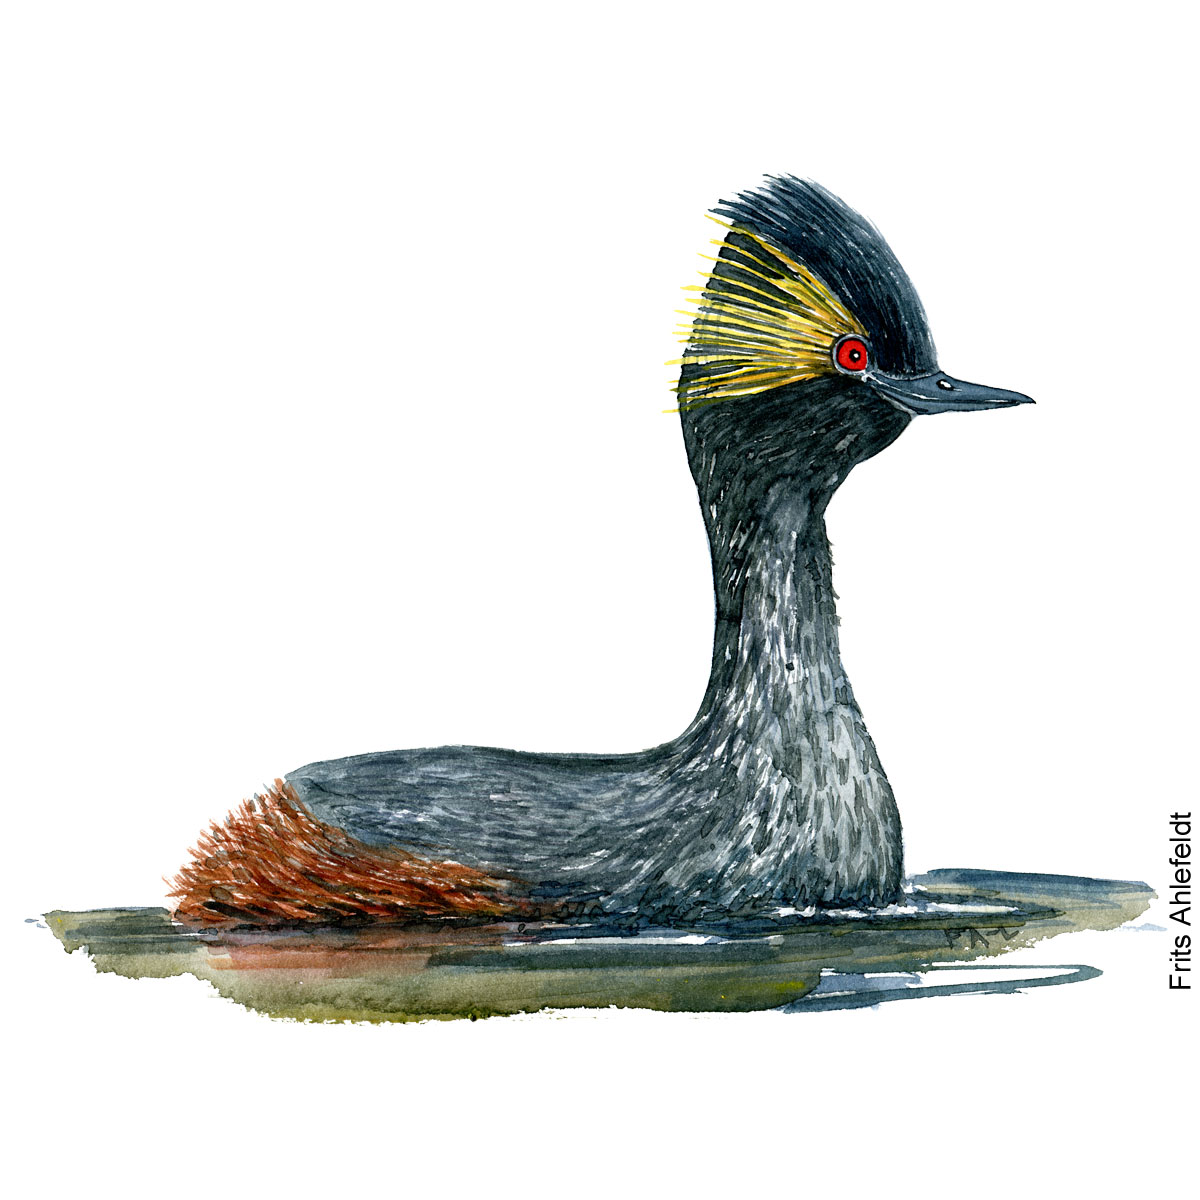 Black-necked grebe Bird watercolor illustration handmade by Frits Ahlefeldt